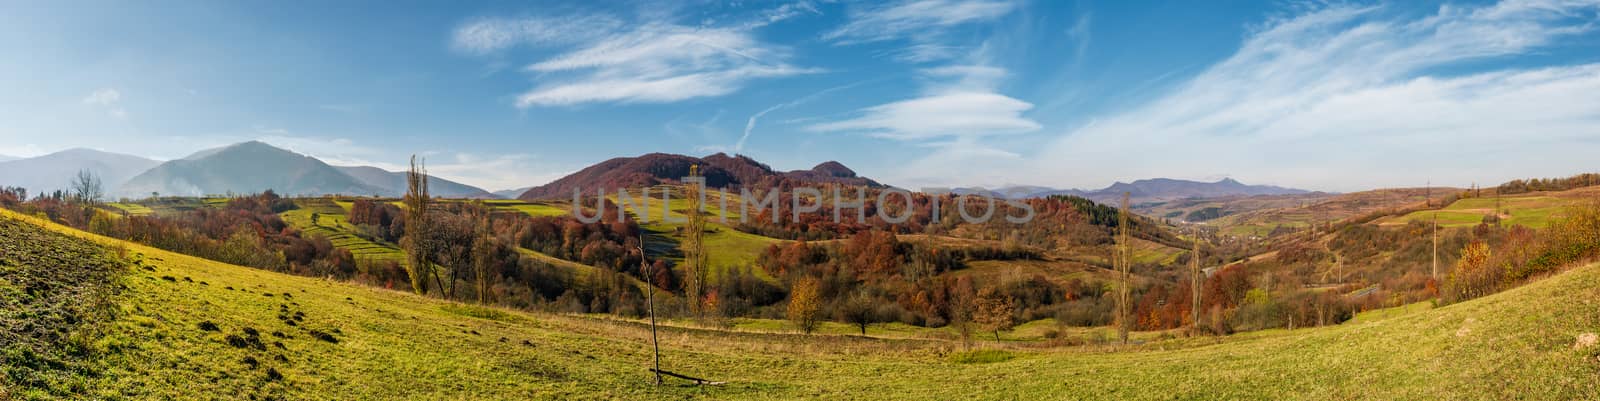 panorama of mountainous rural area in autumn by Pellinni